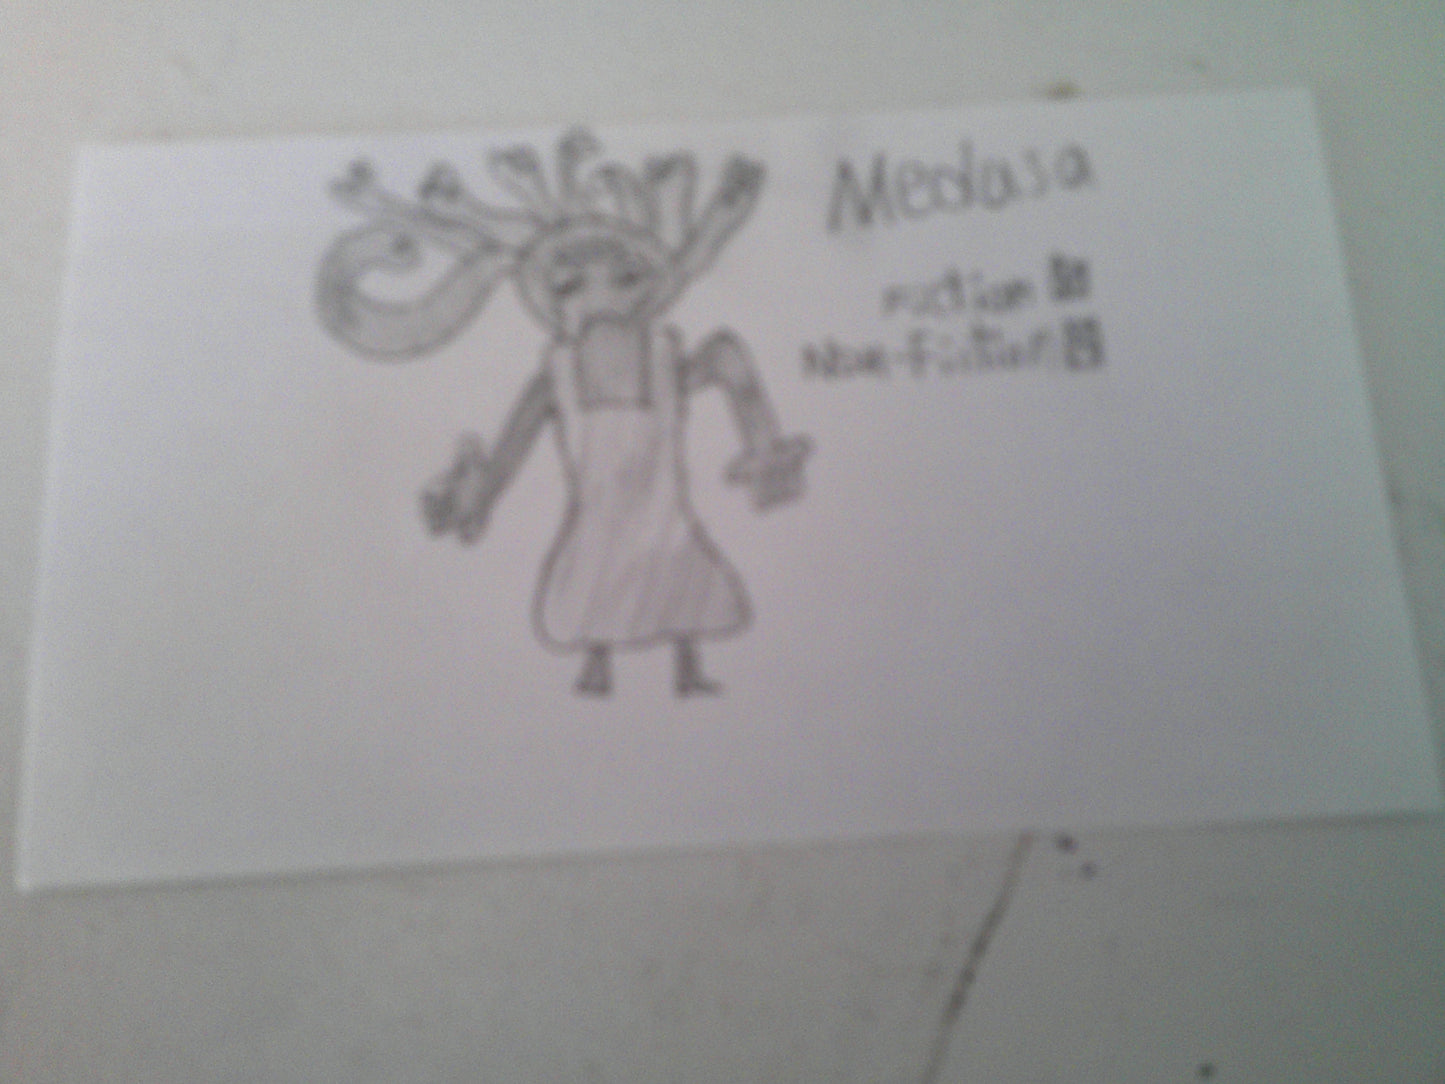 Medusa Character Card